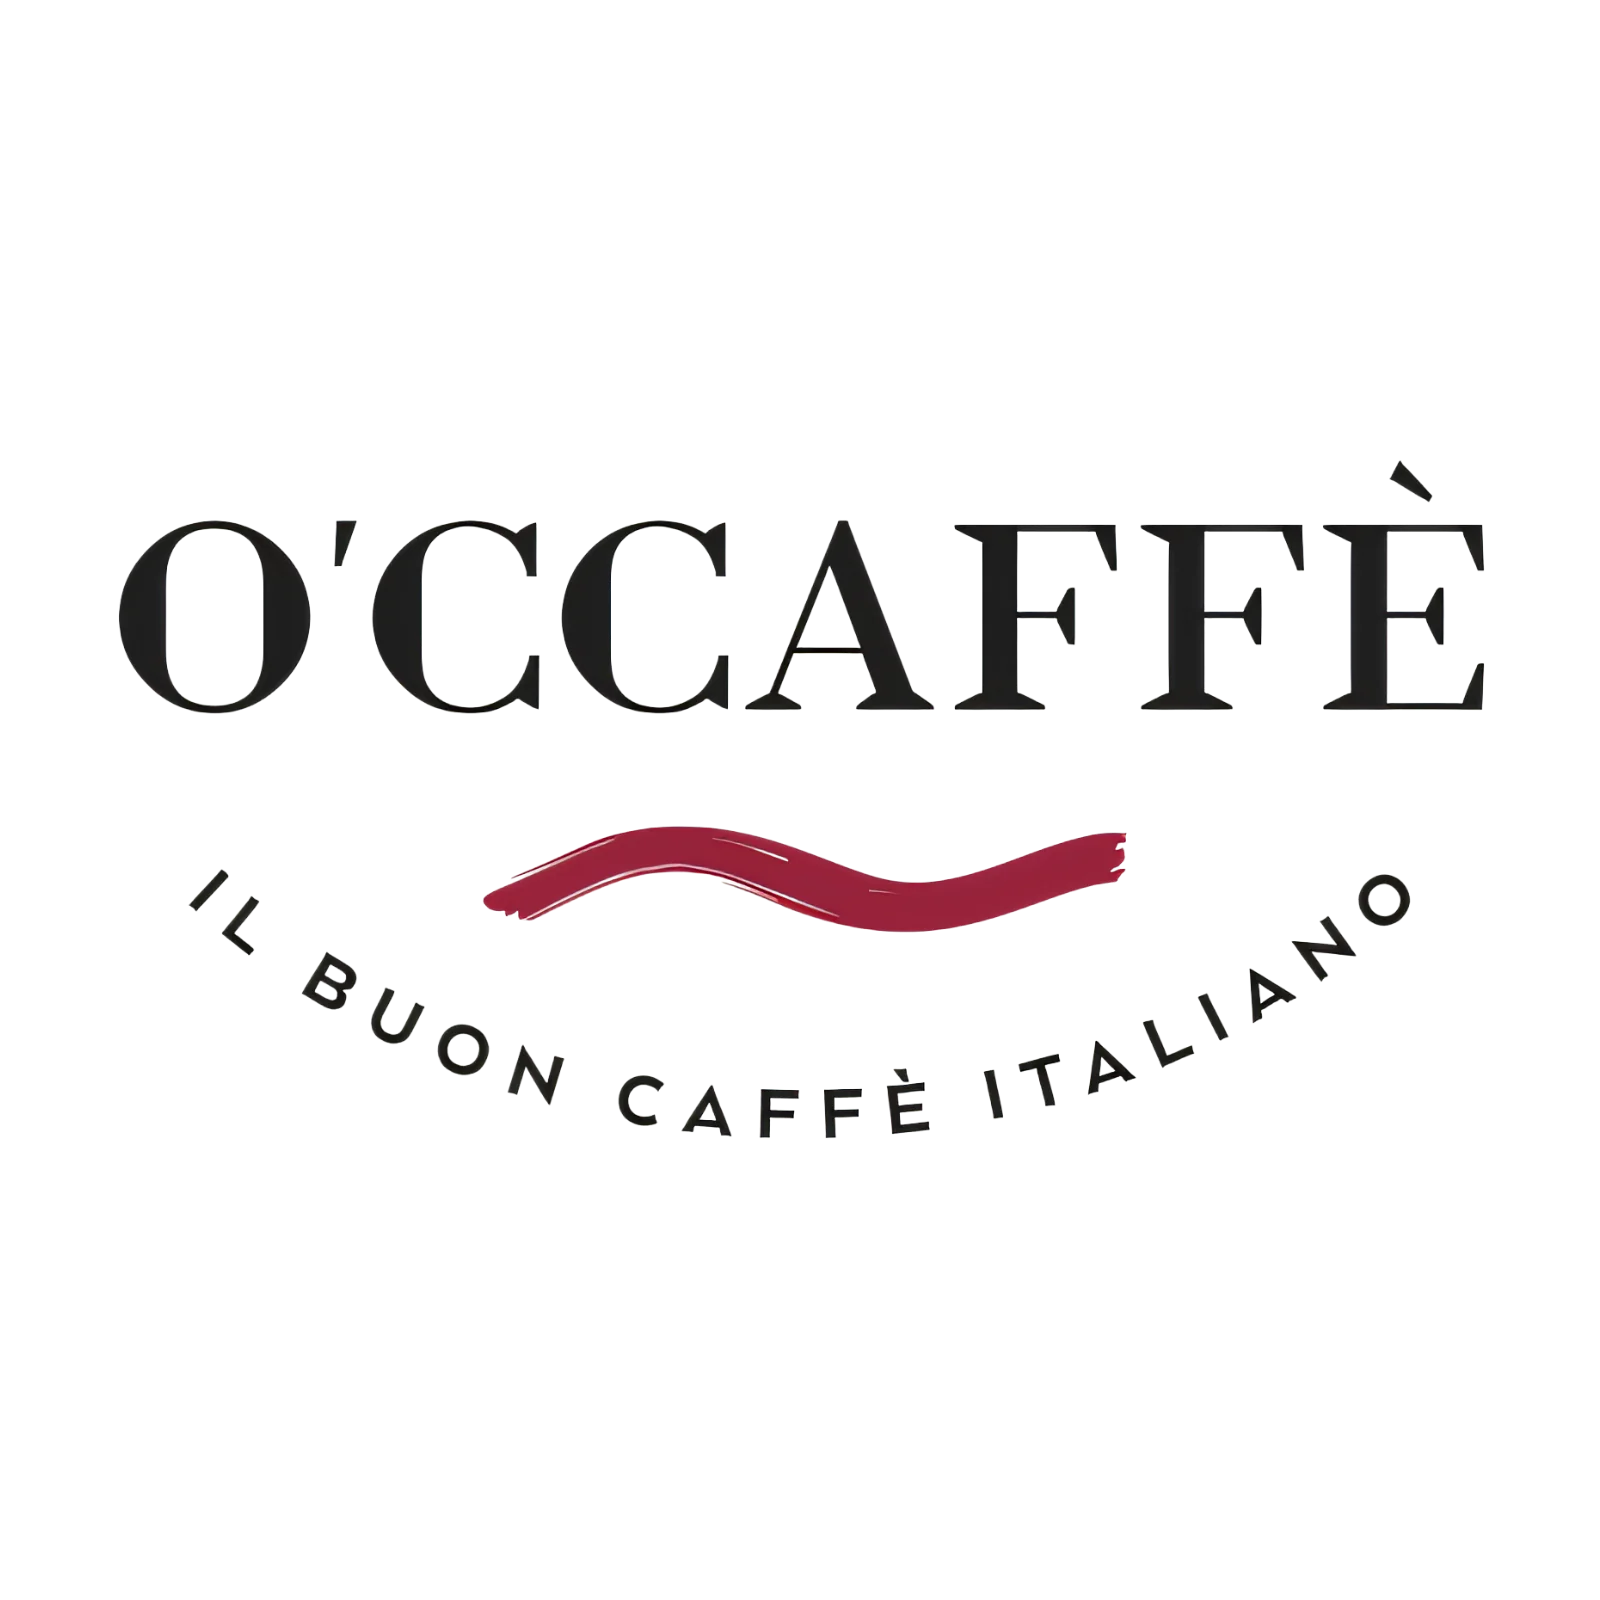 O'ccaffè Café Crème Proffesional 1kg - rostade kaffebönor -Italien